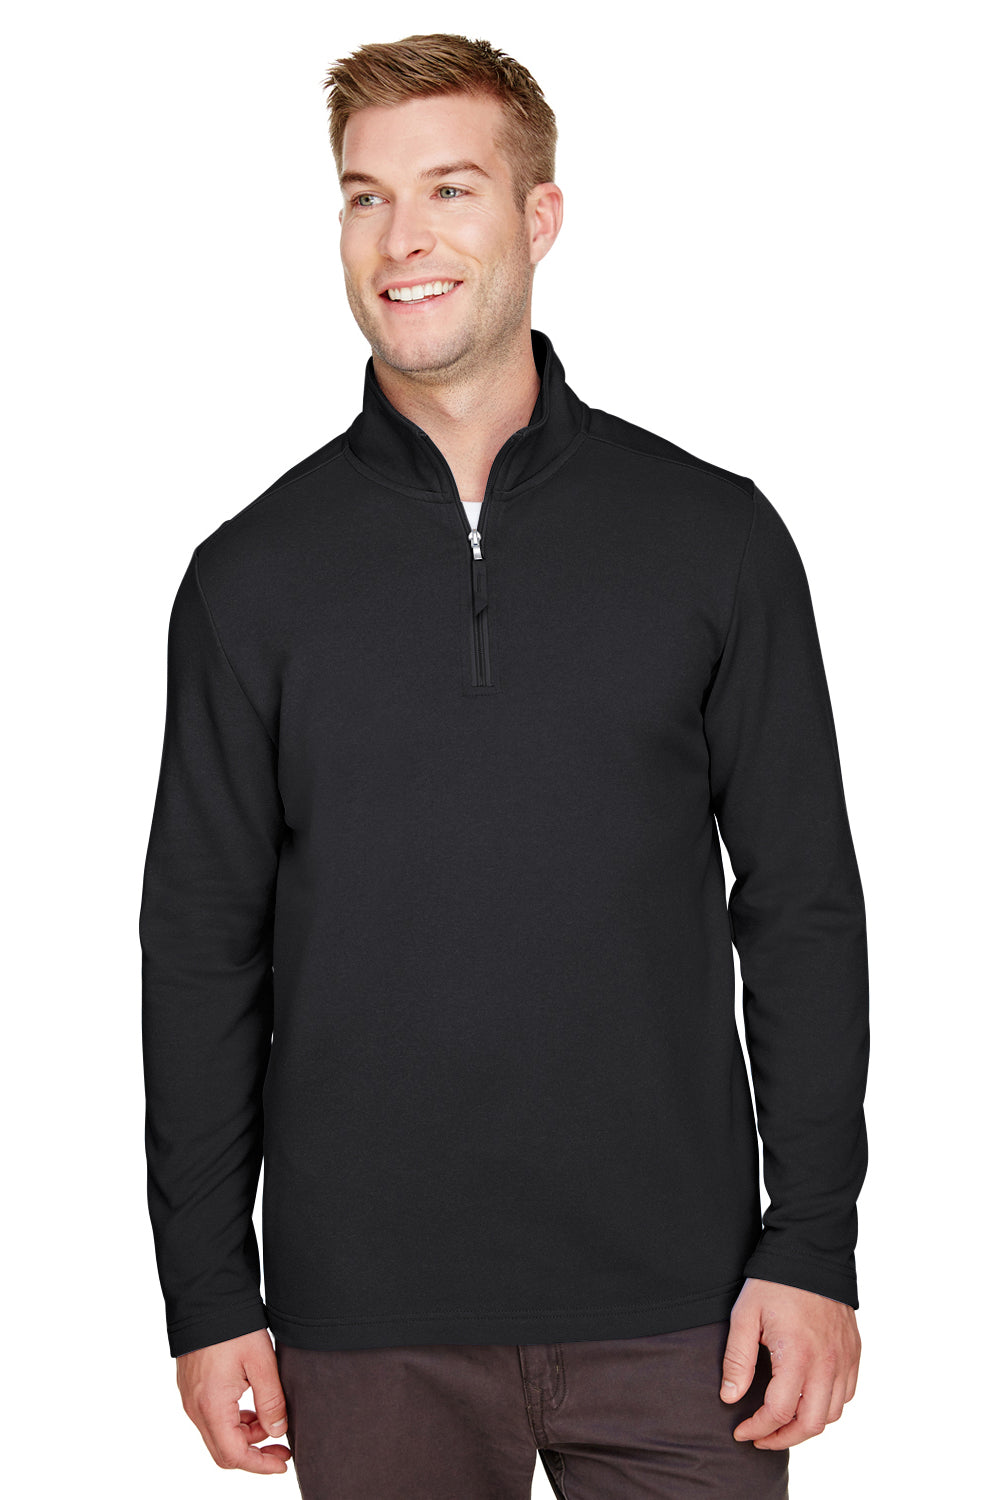 UltraClub UC792 Mens Coastal Performance Moisture Wicking Fleece 1/4 Zip Sweatshirt Black Front